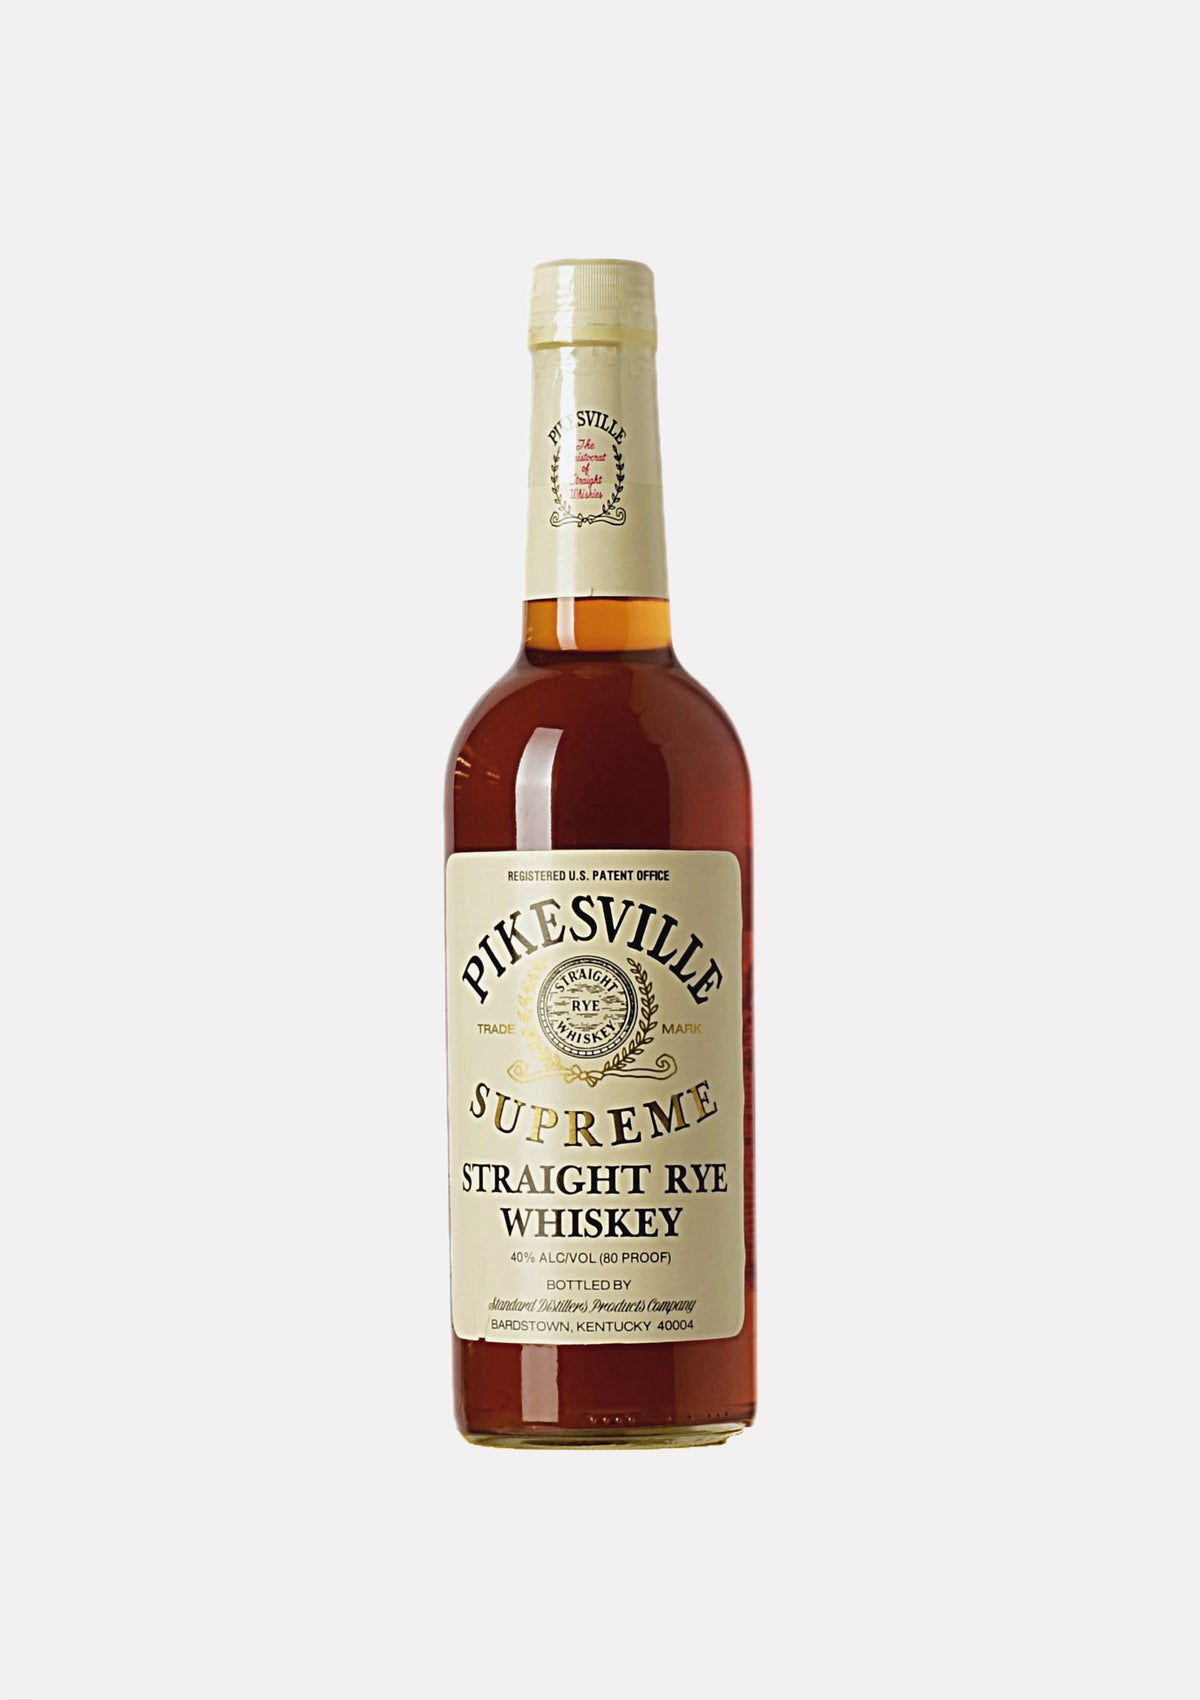 Pikesville Supreme Straight Rye Whiskey